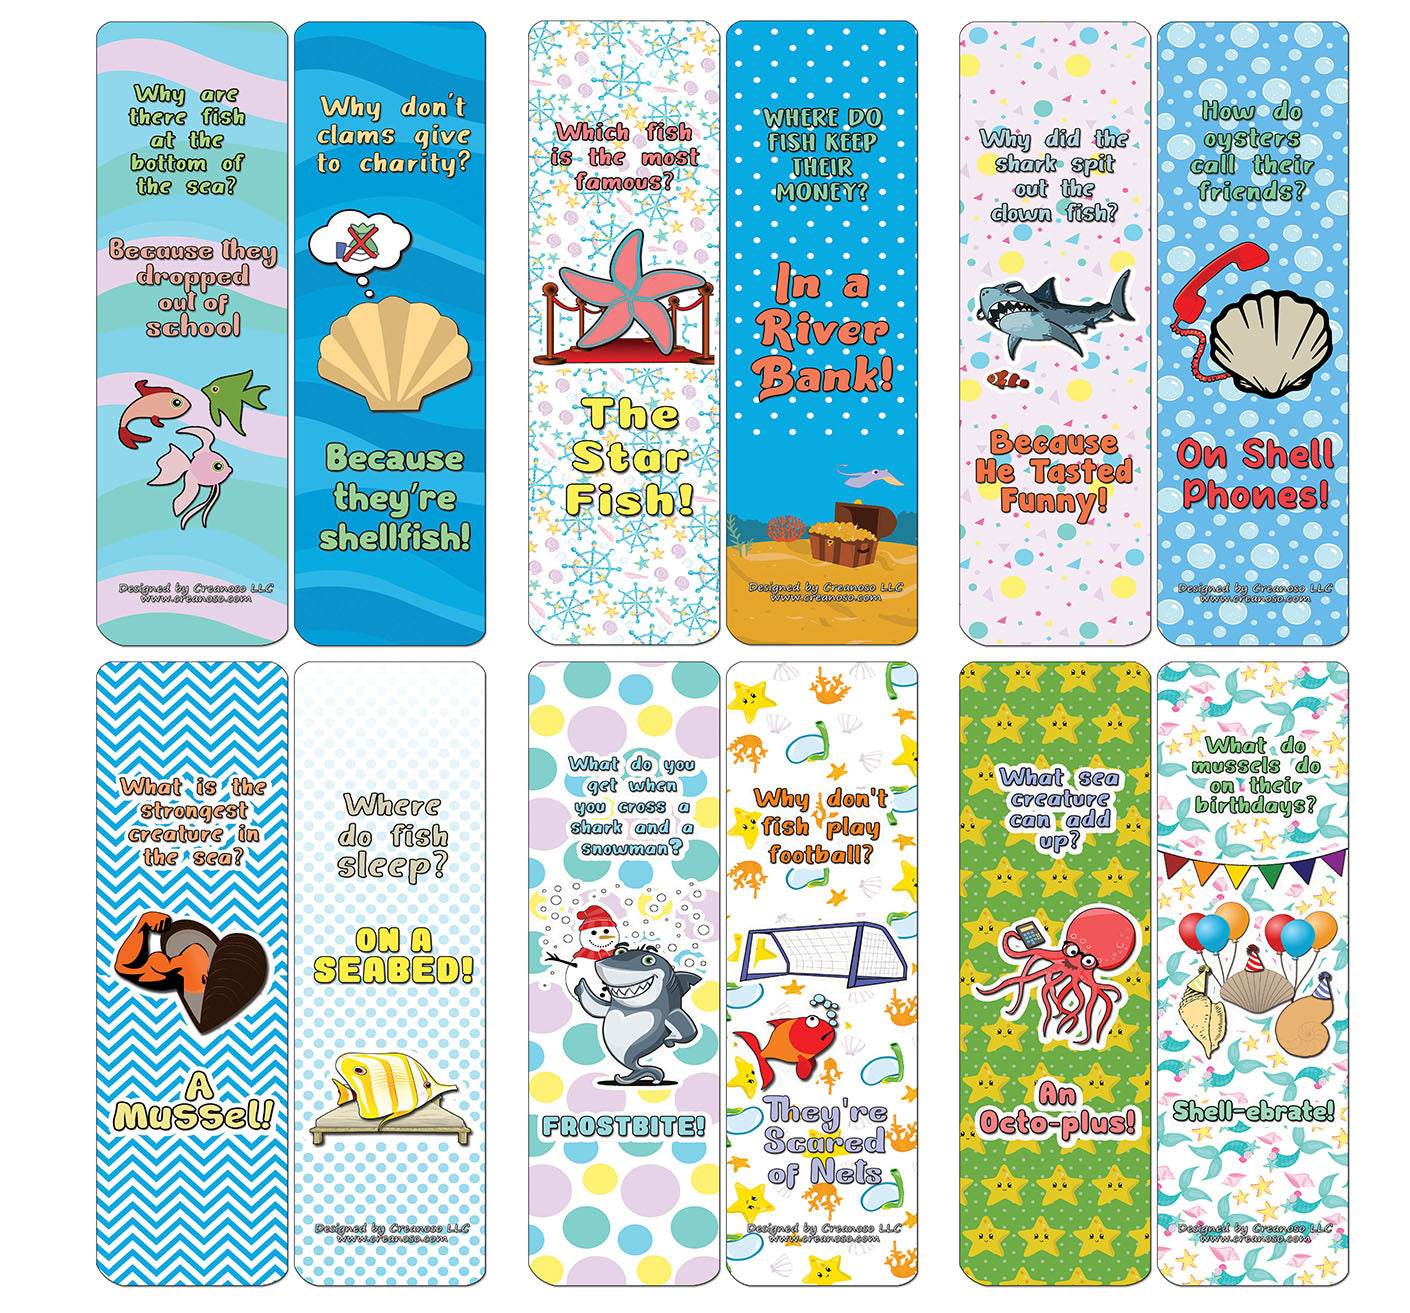 Creanoso Funny Clean Jokes Bookmarks -  Sea Creatures - Humorous Gift Set